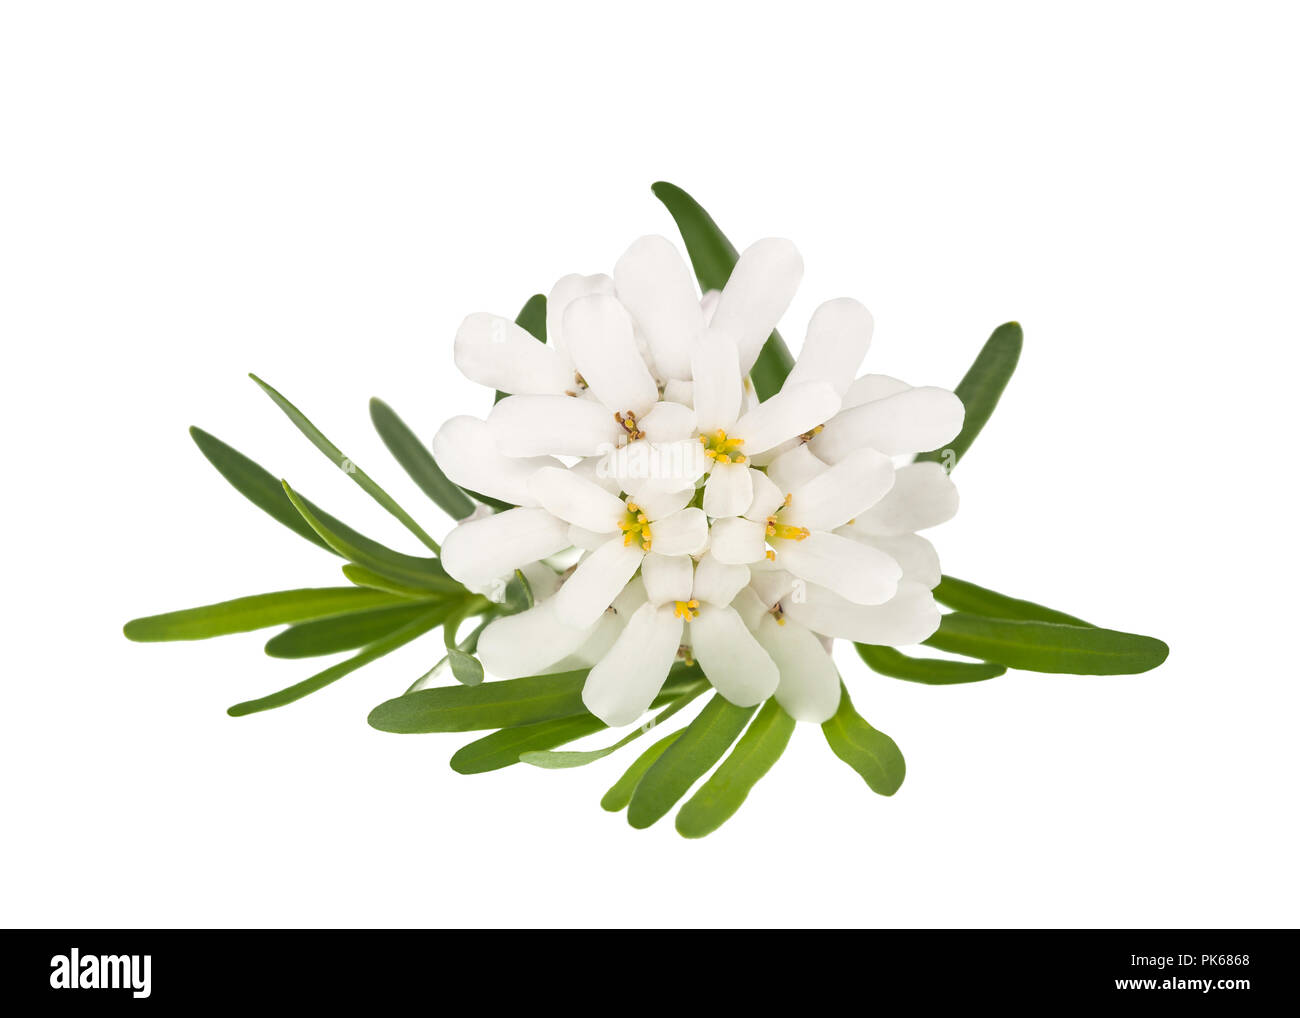 Iberis sempervirens flowers isolated on white background Stock Photo